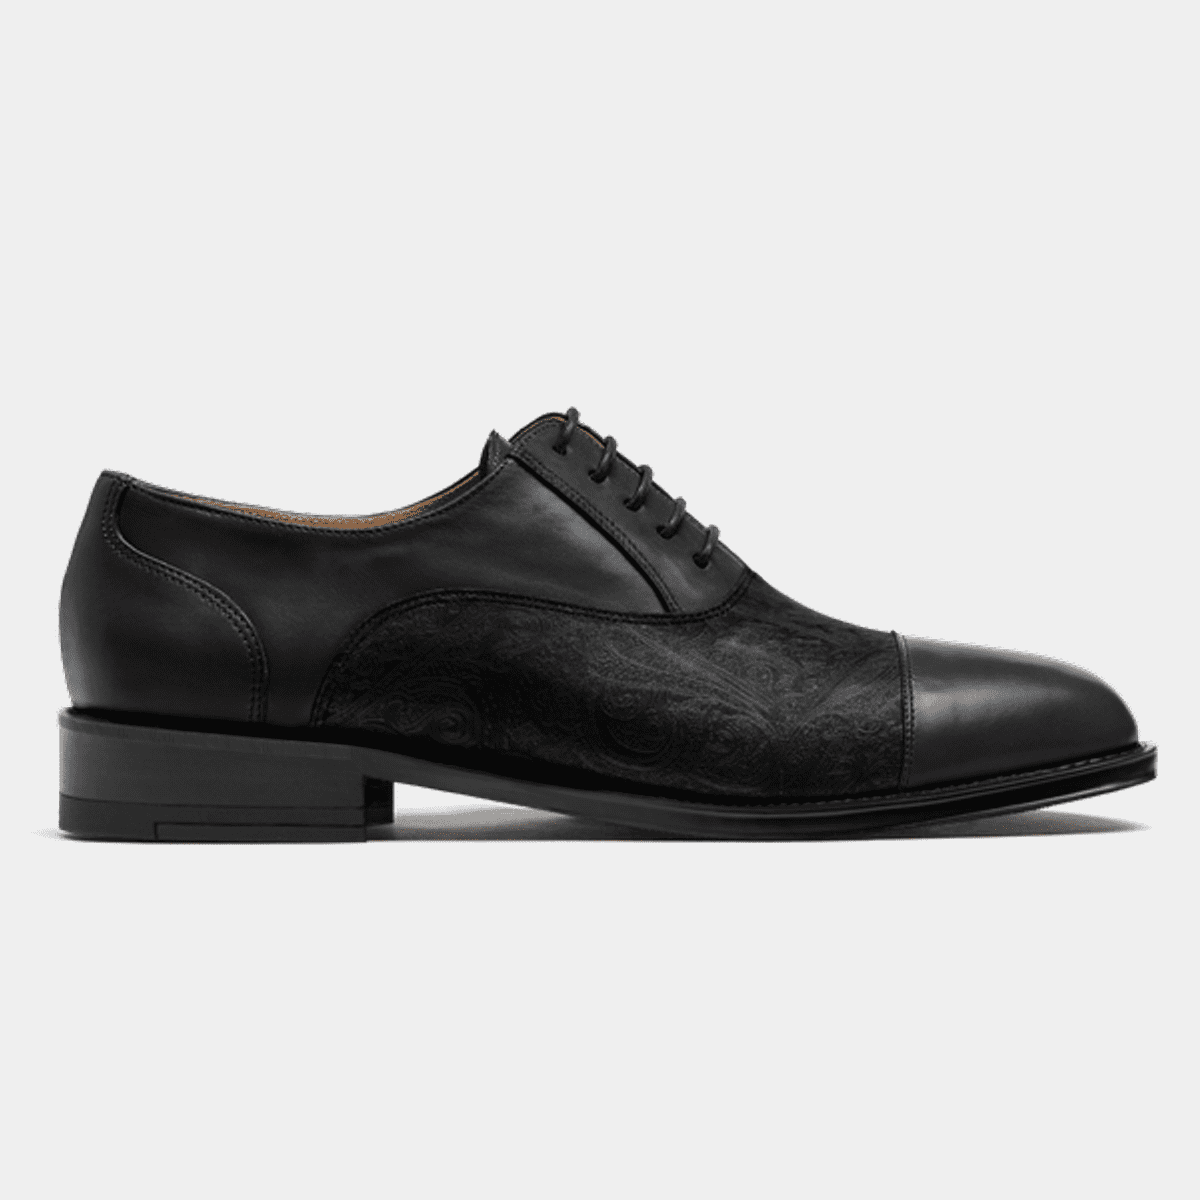 Cap toe Oxford shoes - black leather & velvet